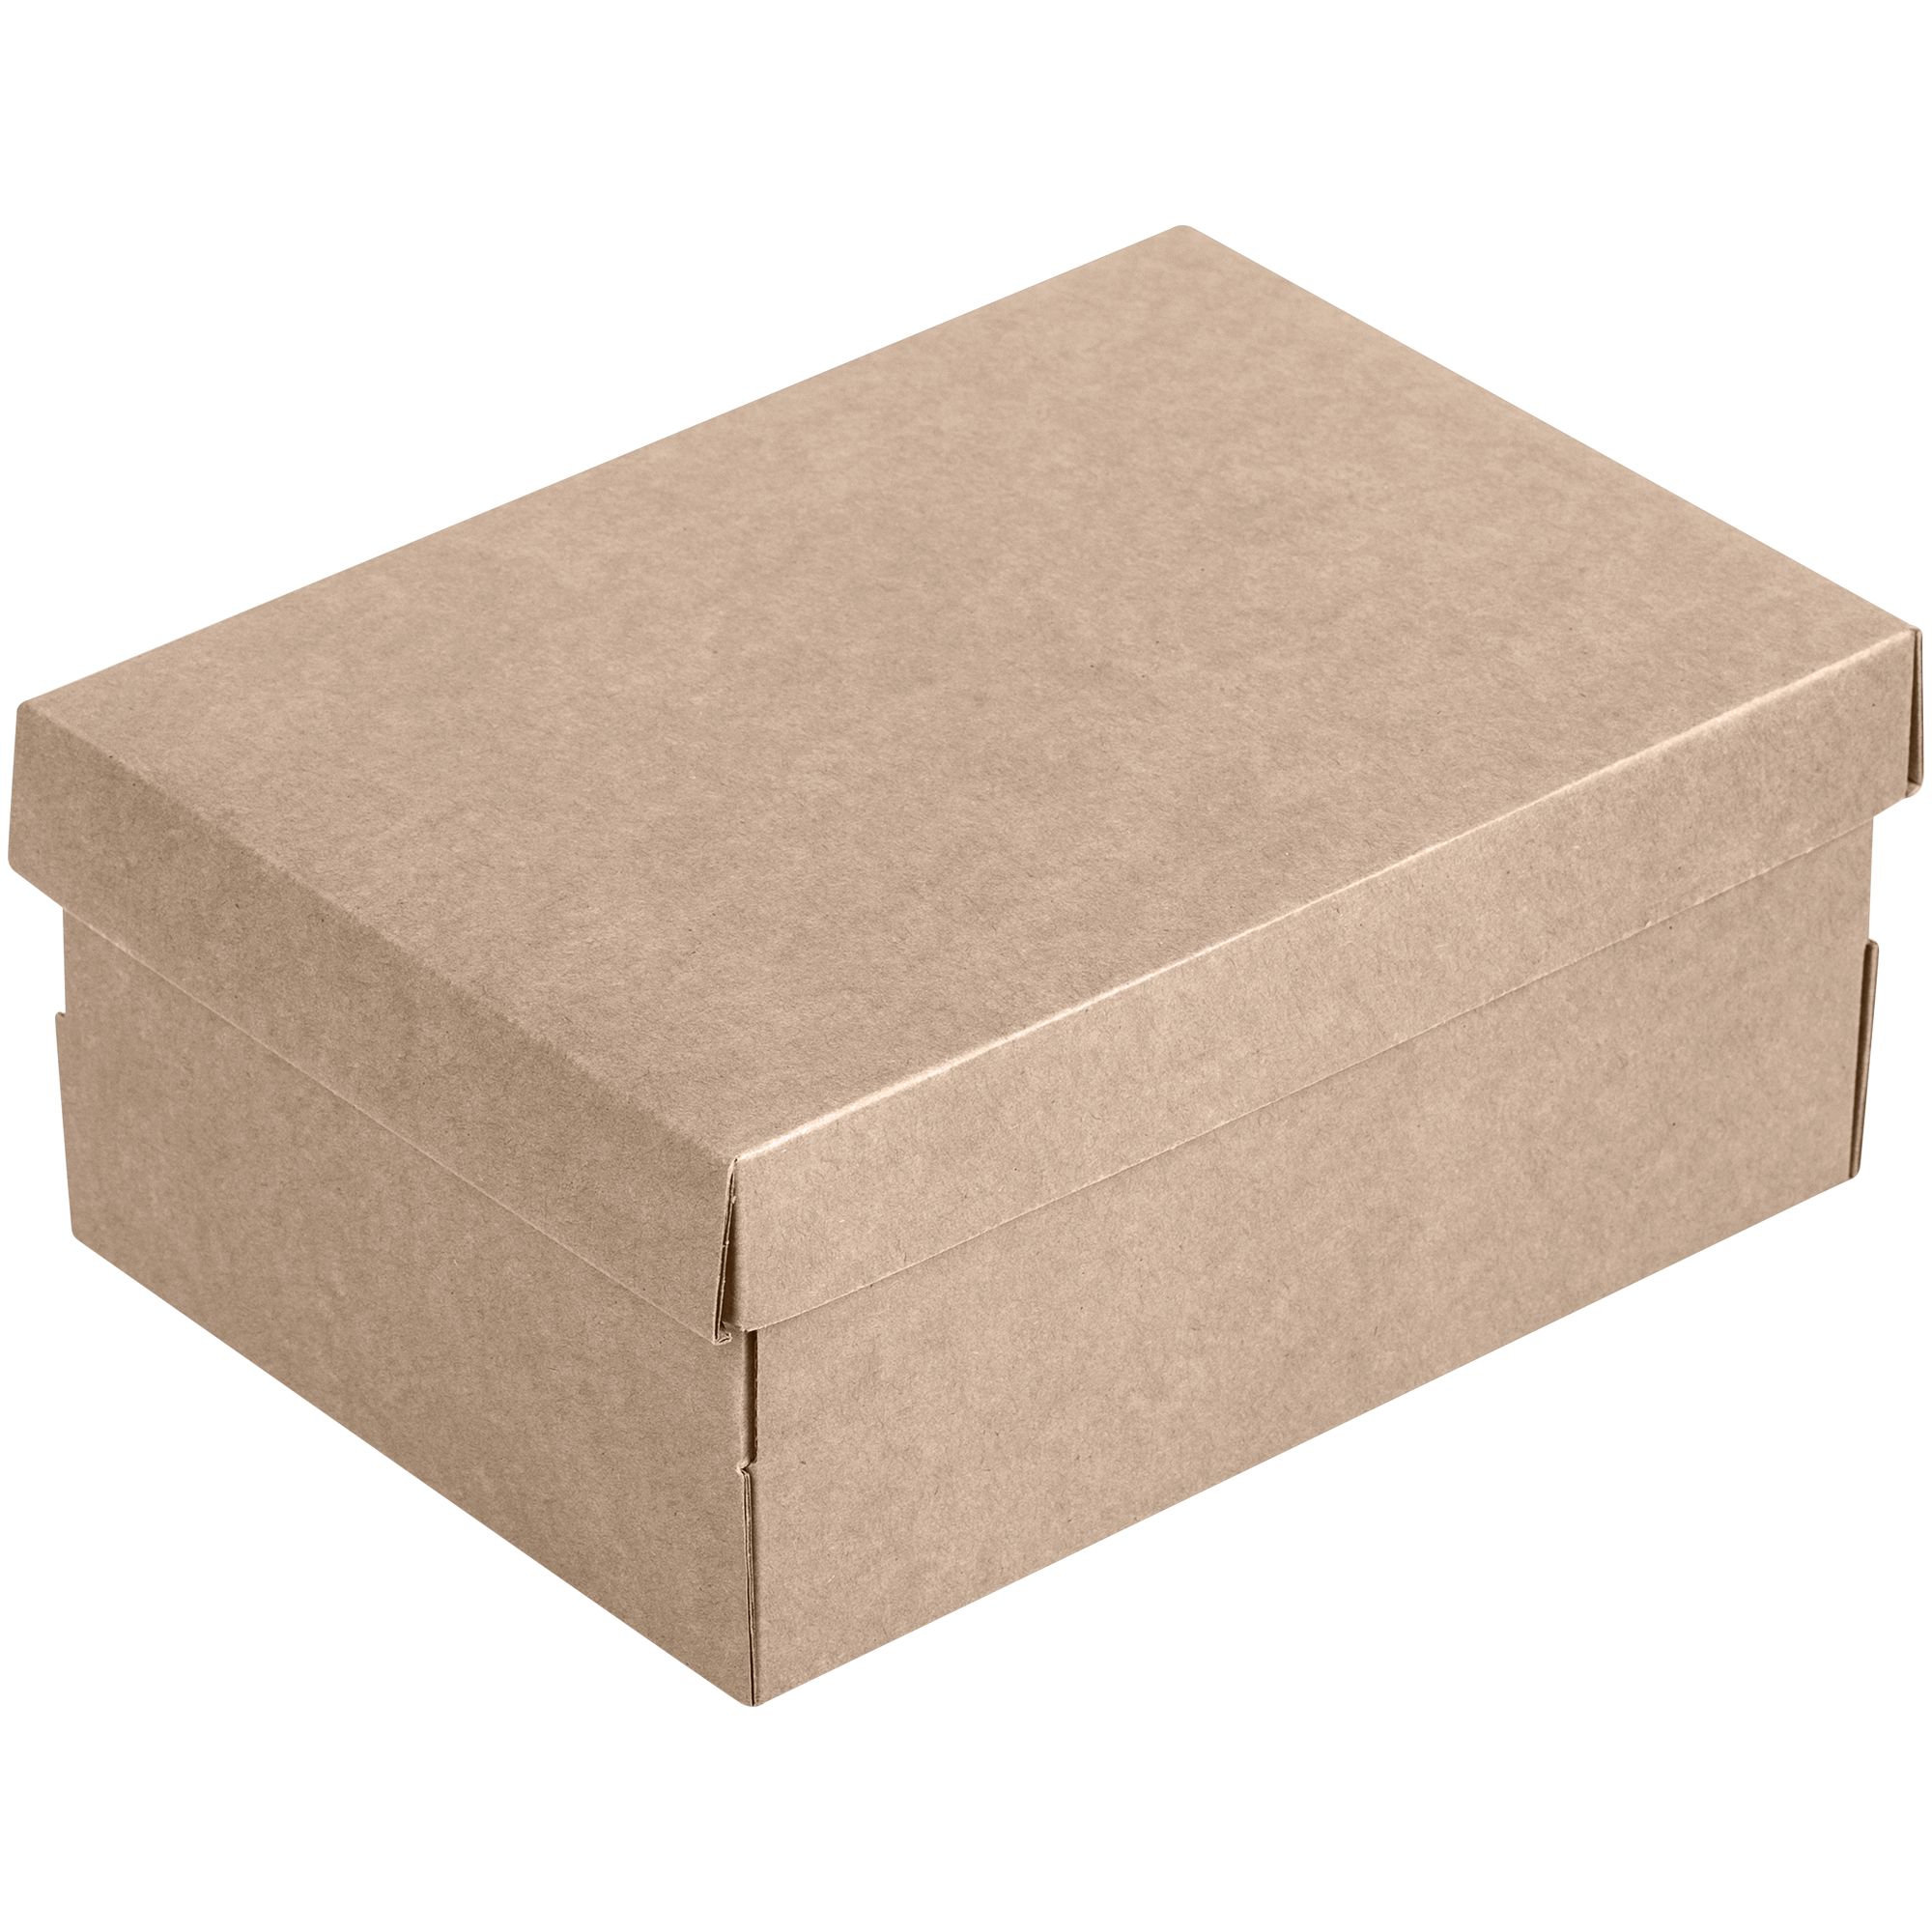 Купить коробки в иваново. Коробка in Case l, крафт (арт. 6936.00). Набор Sweeting Honey Cream. Картонные коробки. Коробки картонные упаковочные.